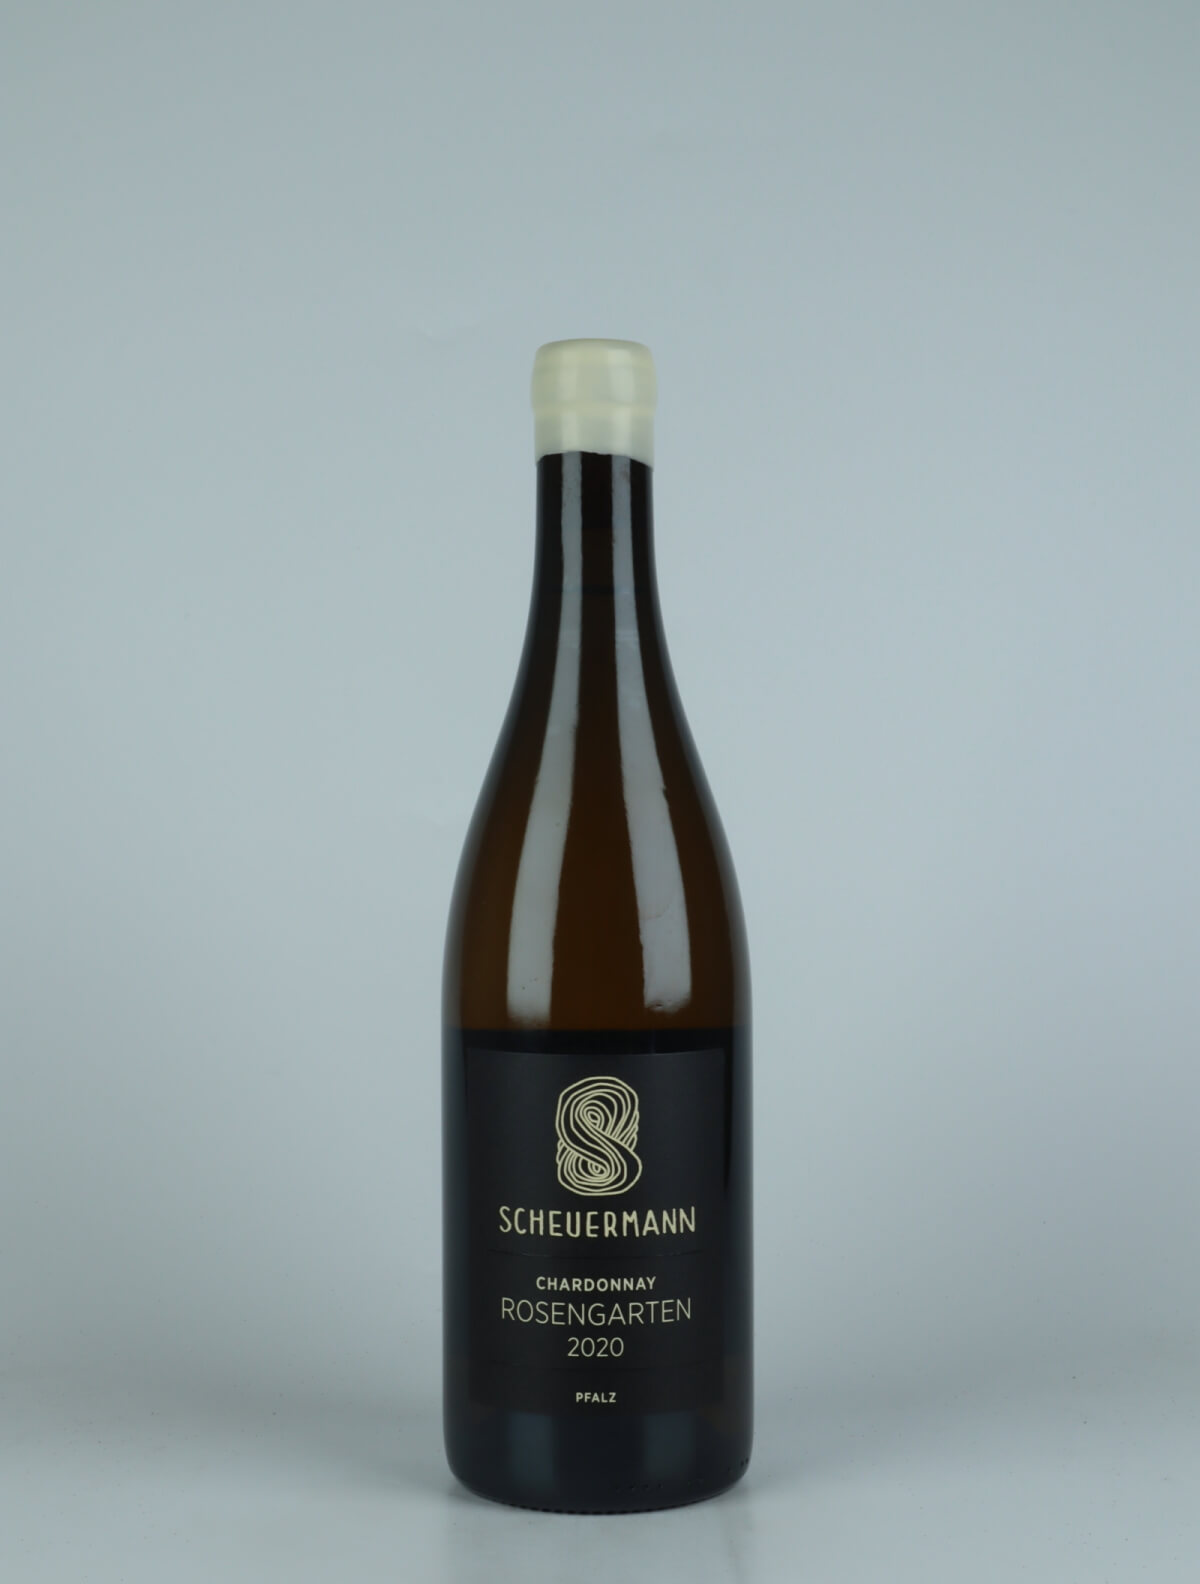 En flaske 2020 Chardonnay Rosengarten Hvidvin fra Weingut Scheuermann, Pfalz i Tyskland